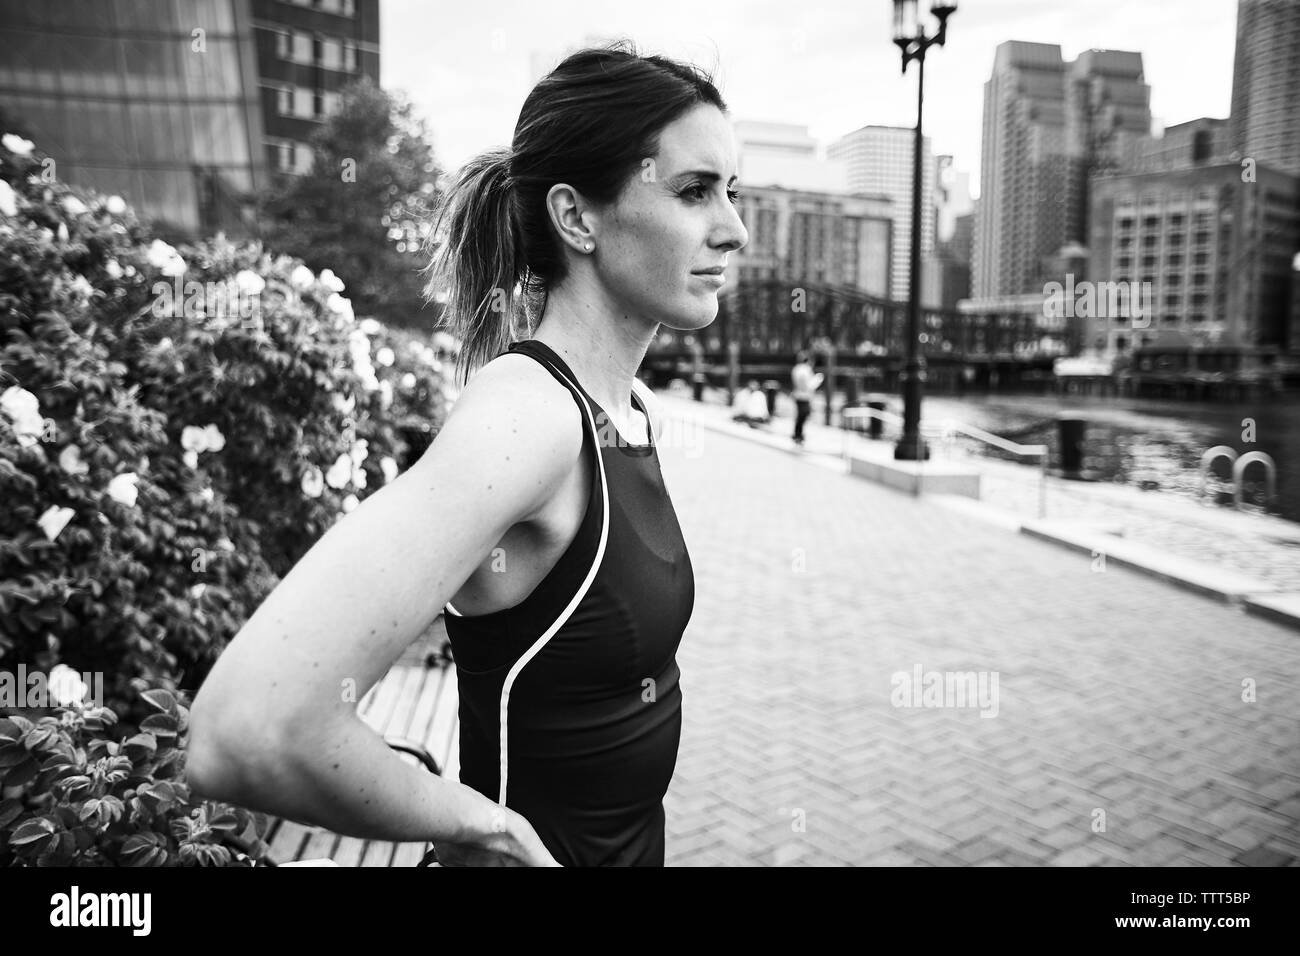 A black and white portrait of a female athlete in Boston. Stock Photo